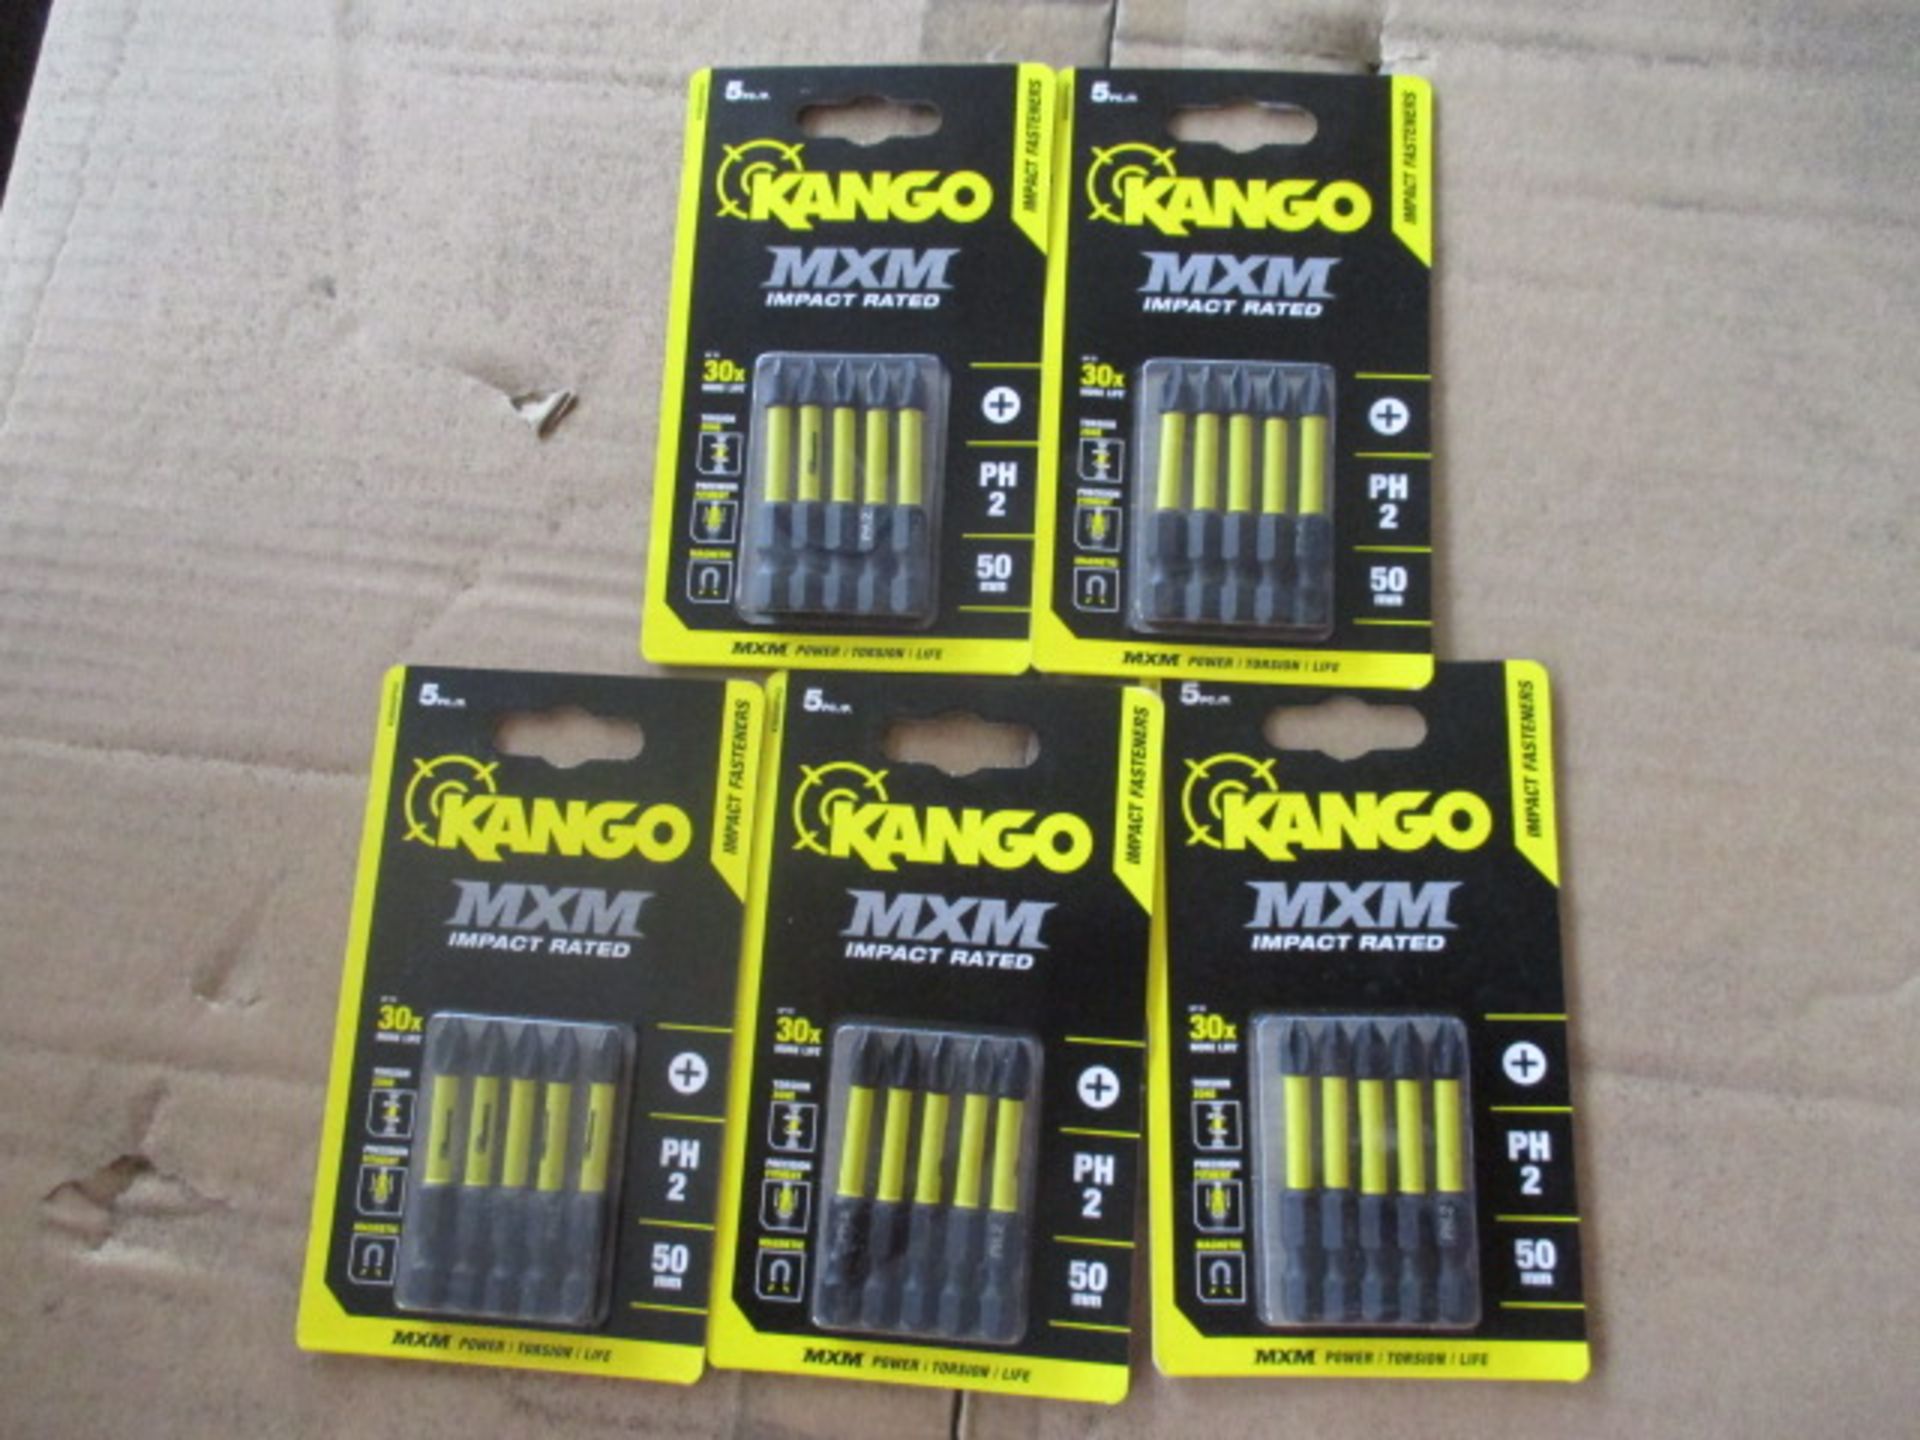 5. cards of Kango MXM impact drill bits